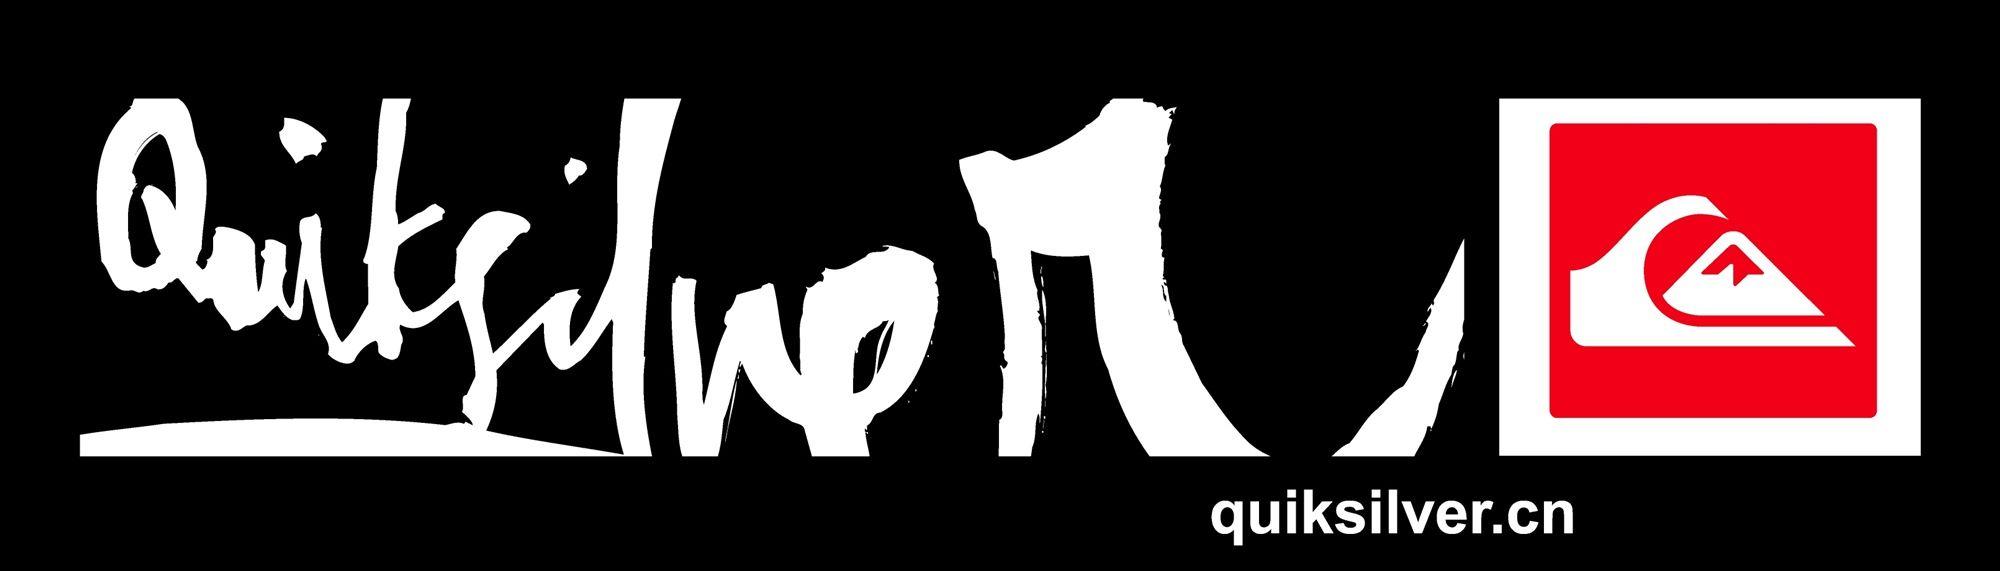 Quiksilver Logo Vector Free Wallpaper